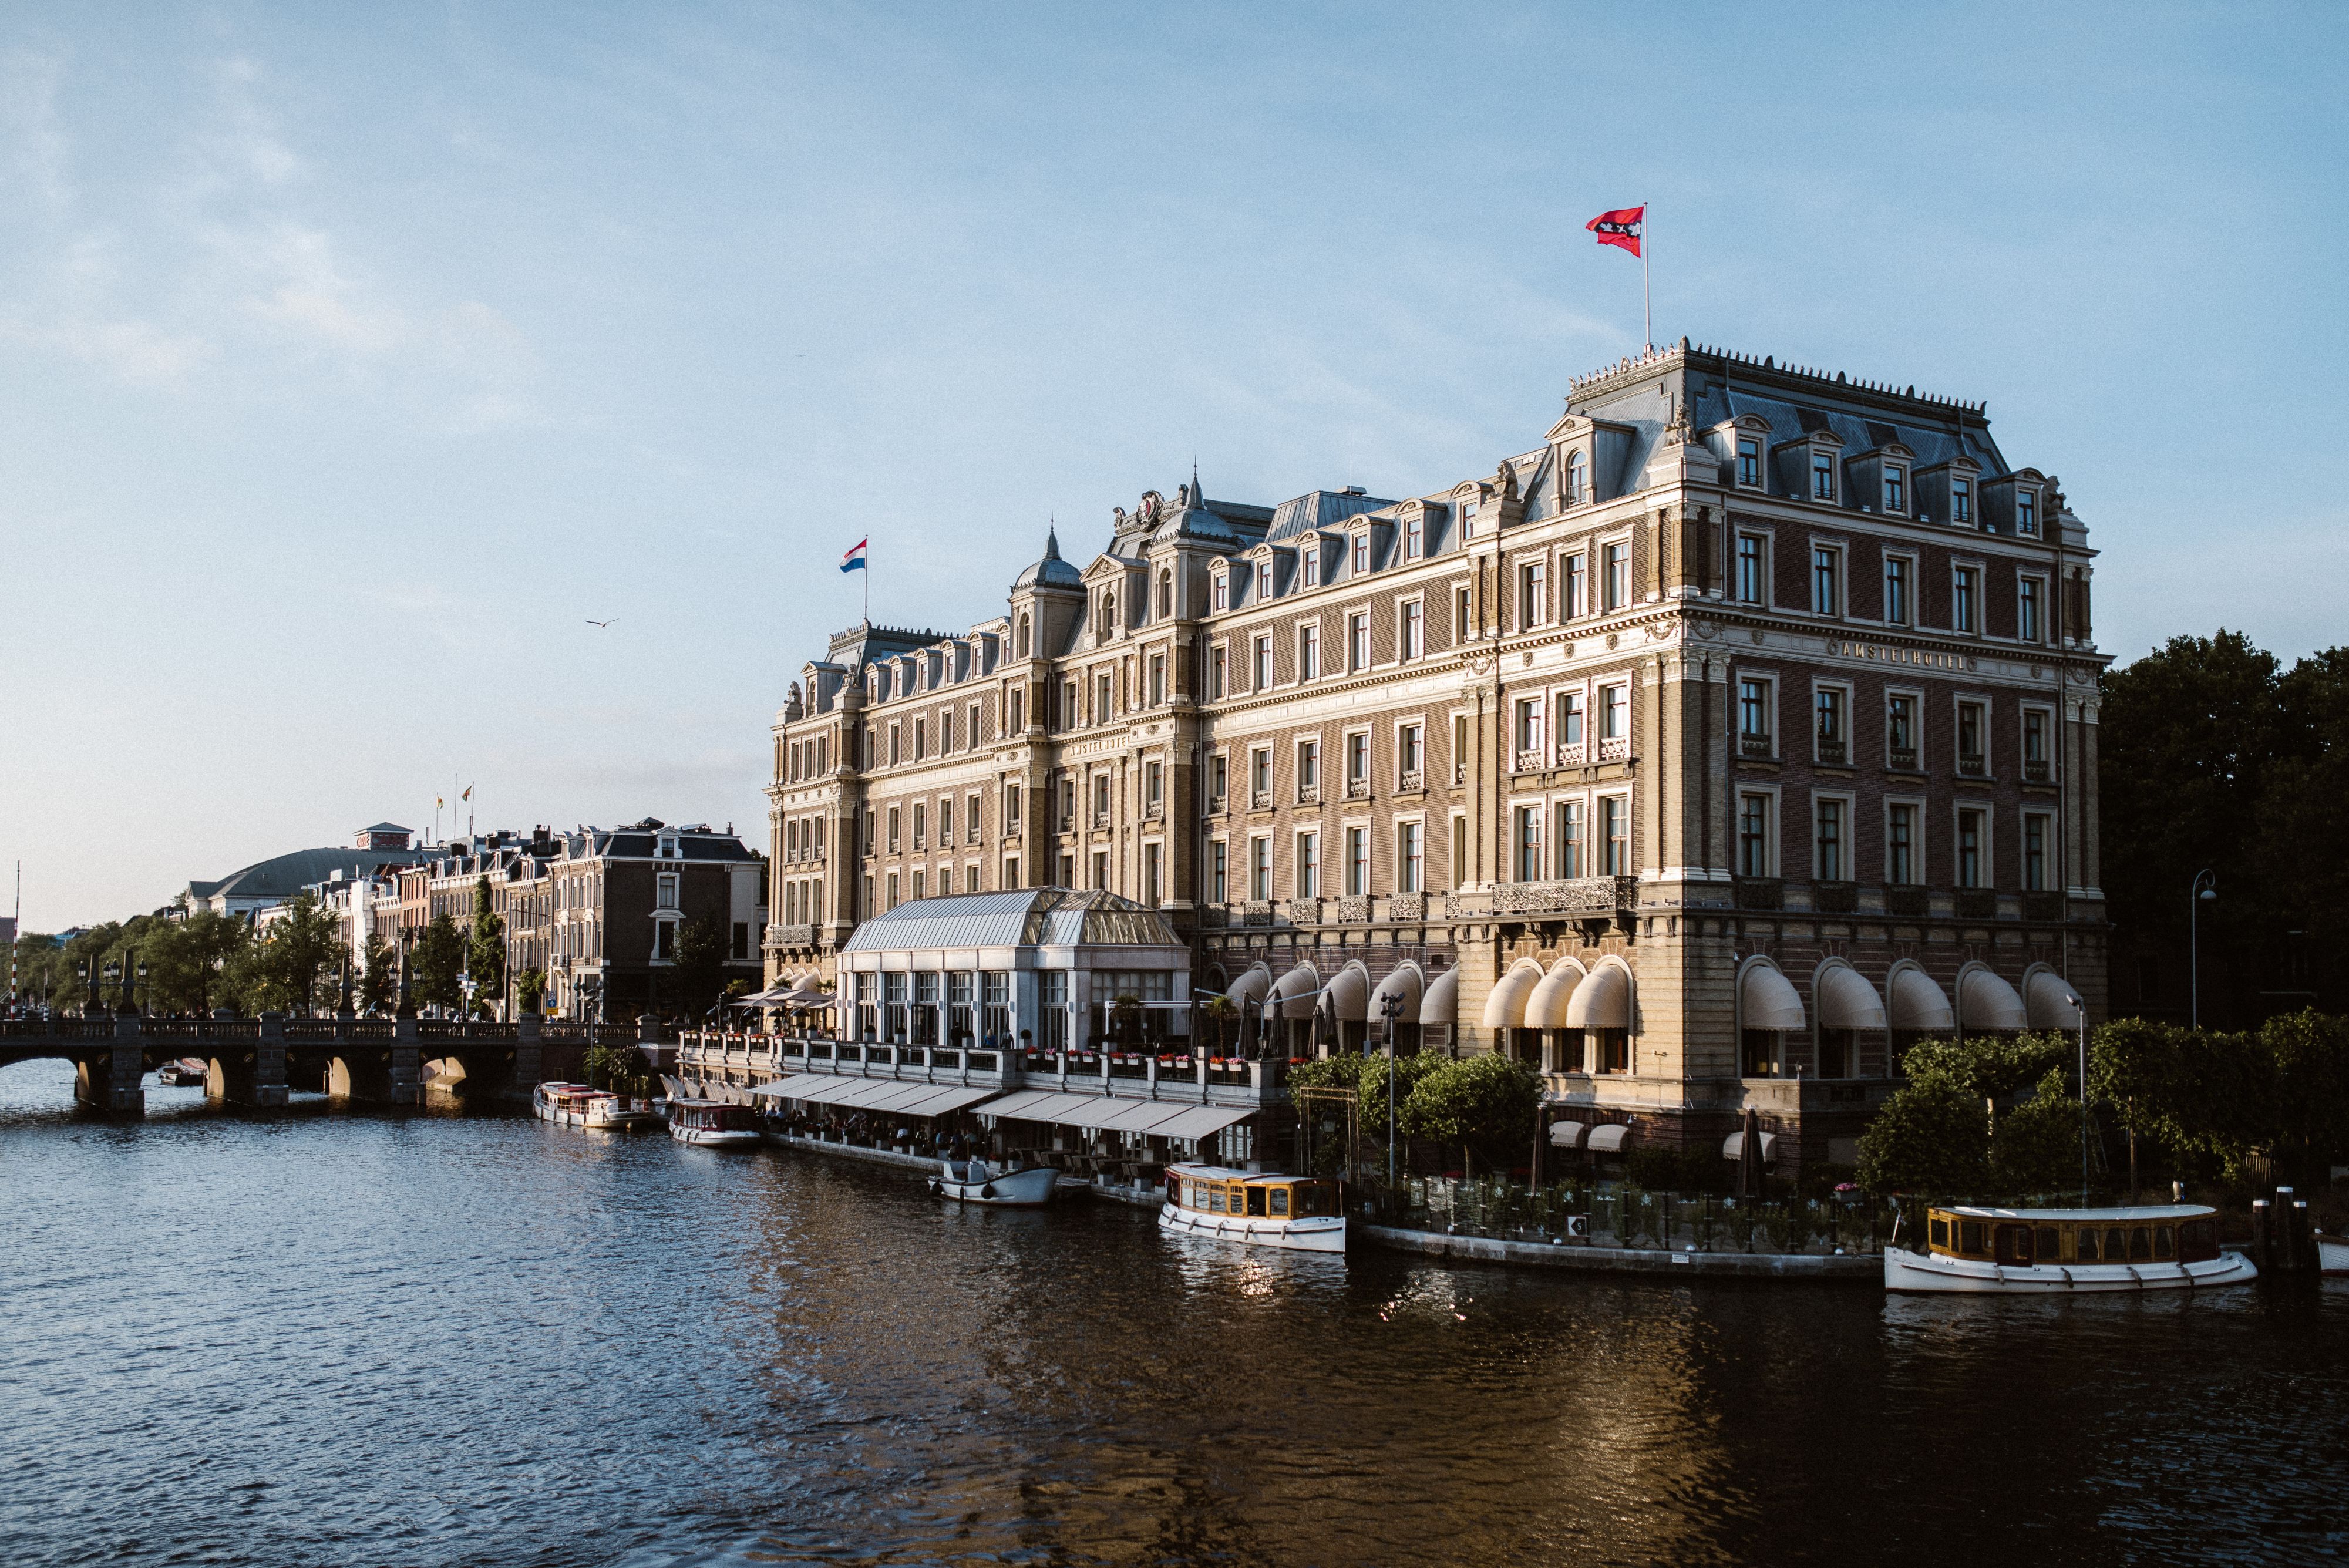 5-Star Hotels: InterContinental Amstel Amsterdam